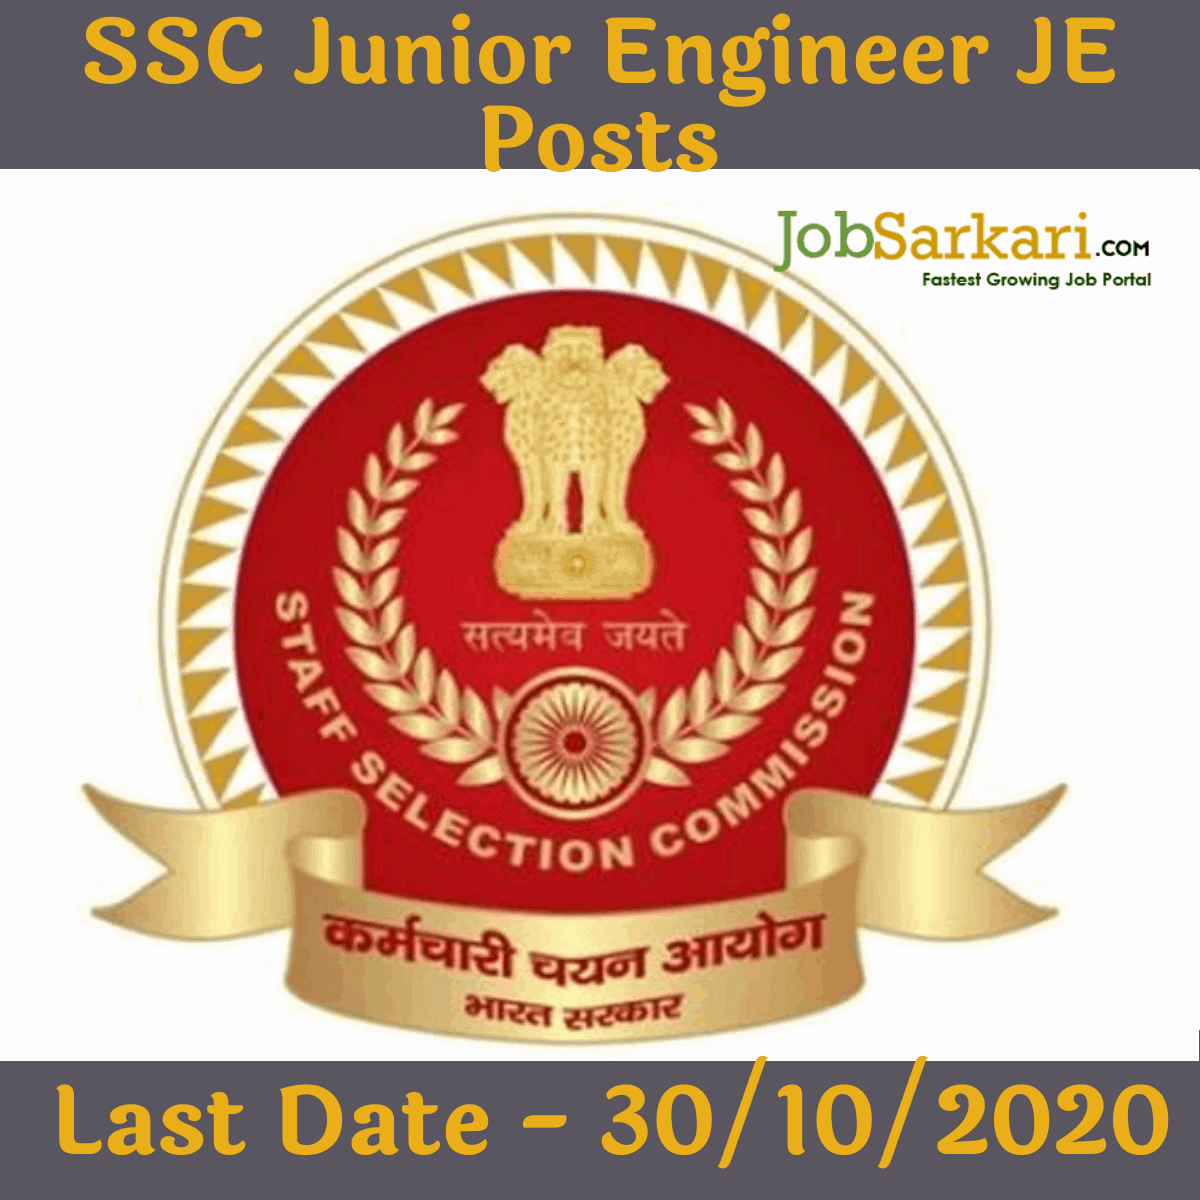 SSC Junior Engineer JE Posts